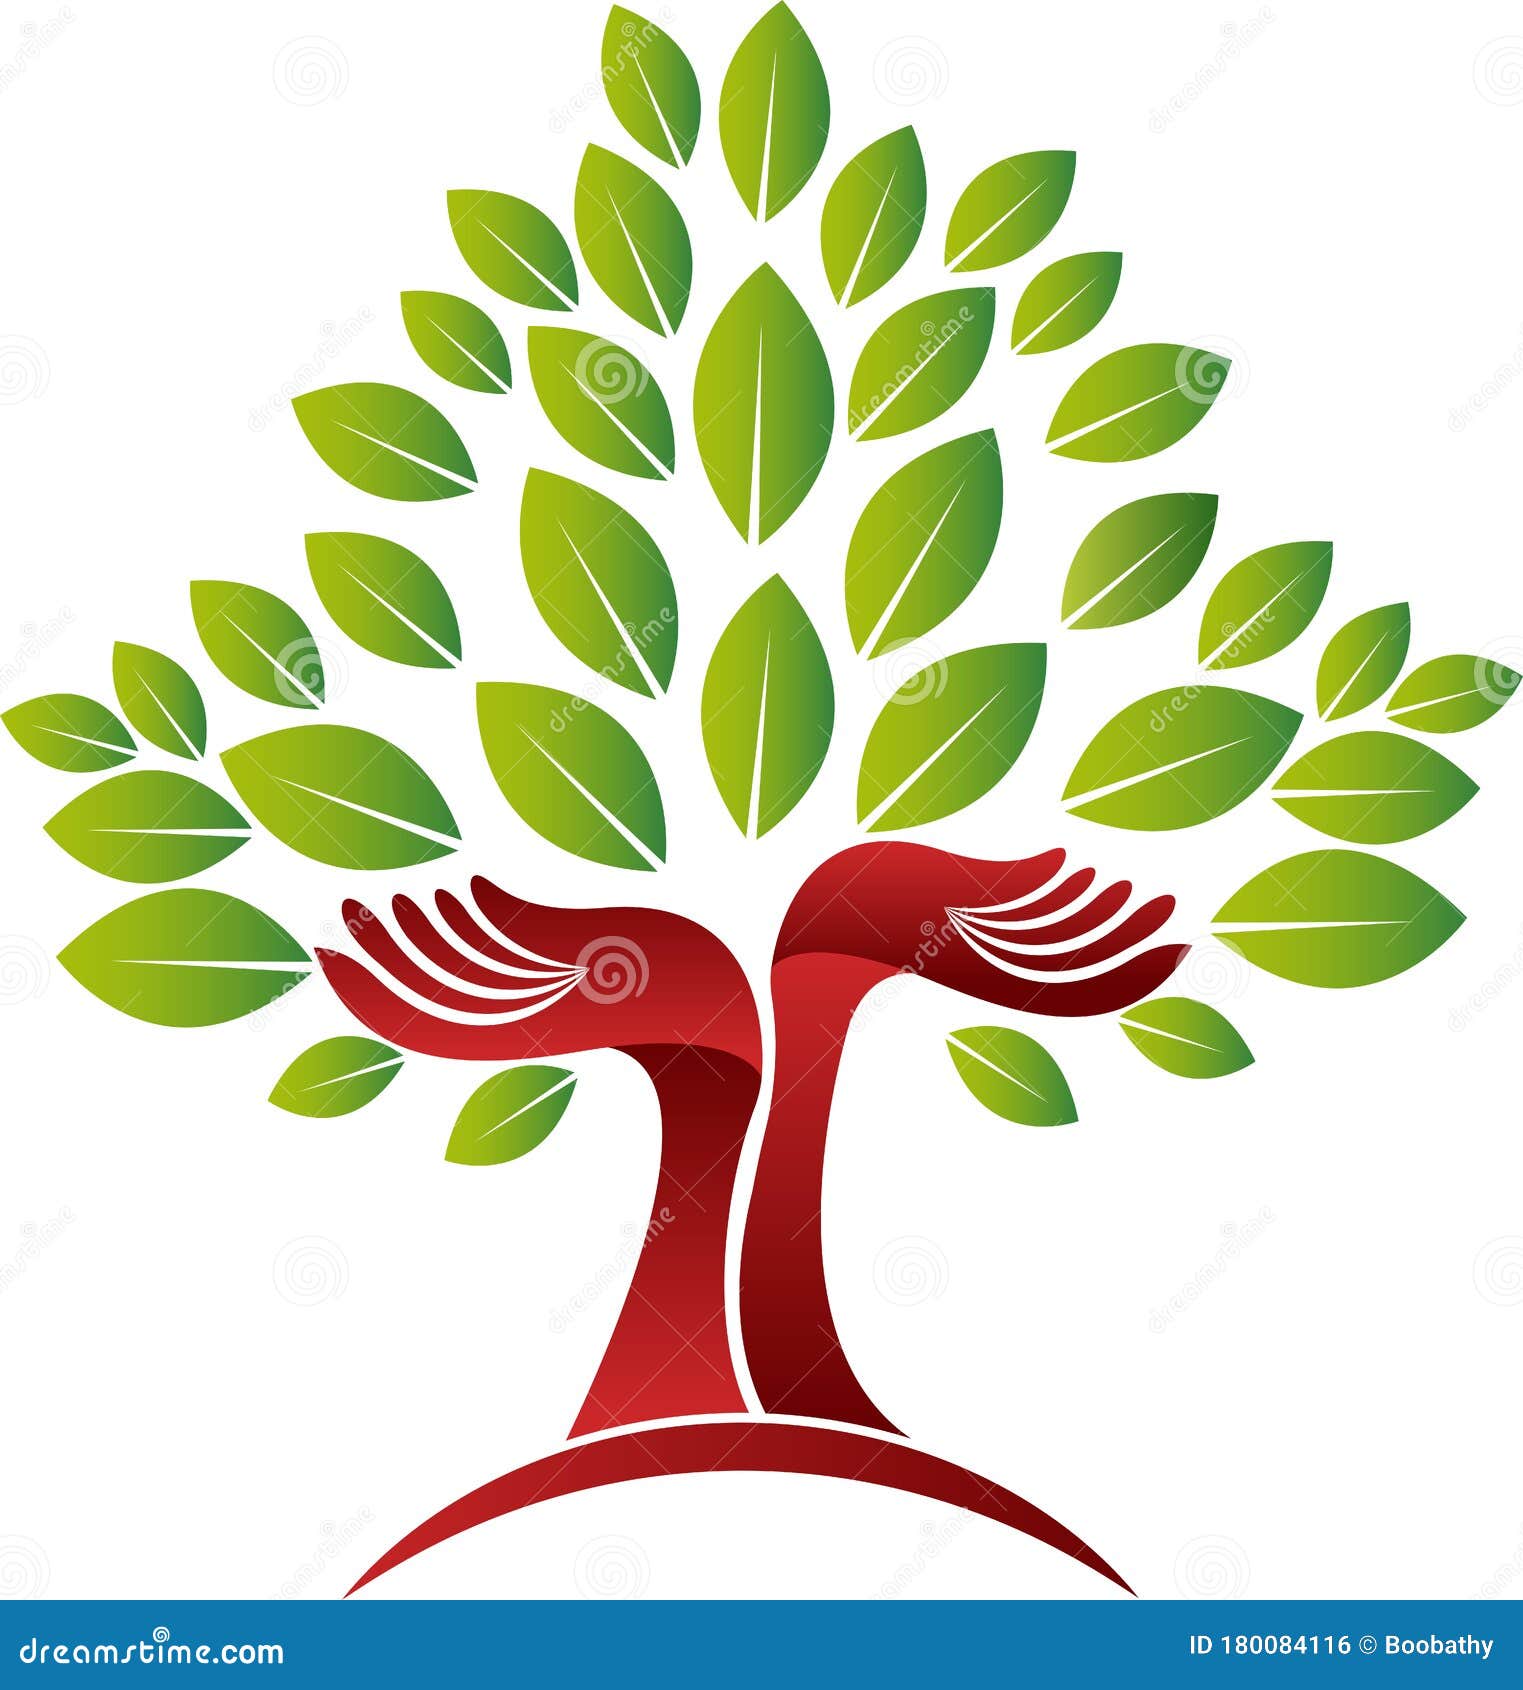 Дерево символ семьи. Логотип дерево. Герб с деревом. Герб семьи дерево. Деревья символы стран